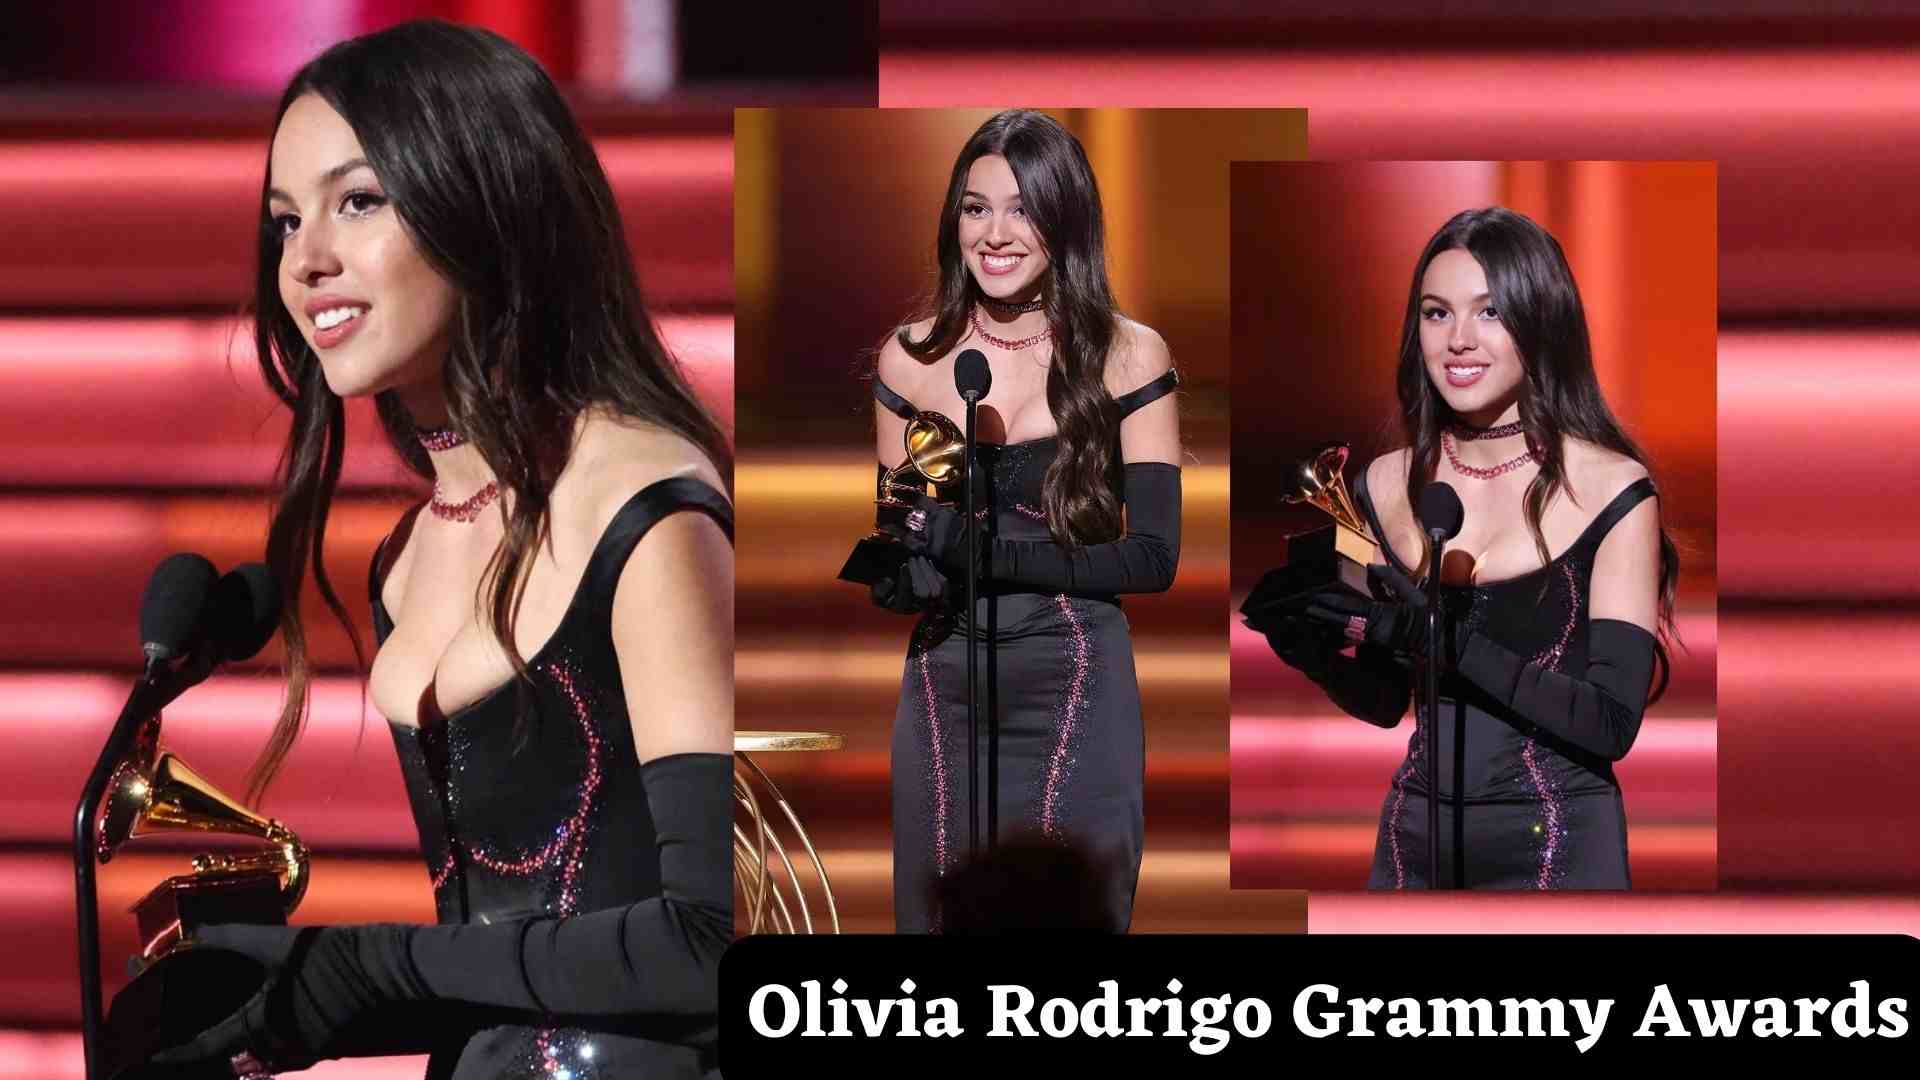 Olivia Rodrigo Grammy Awards Wallpaper and images